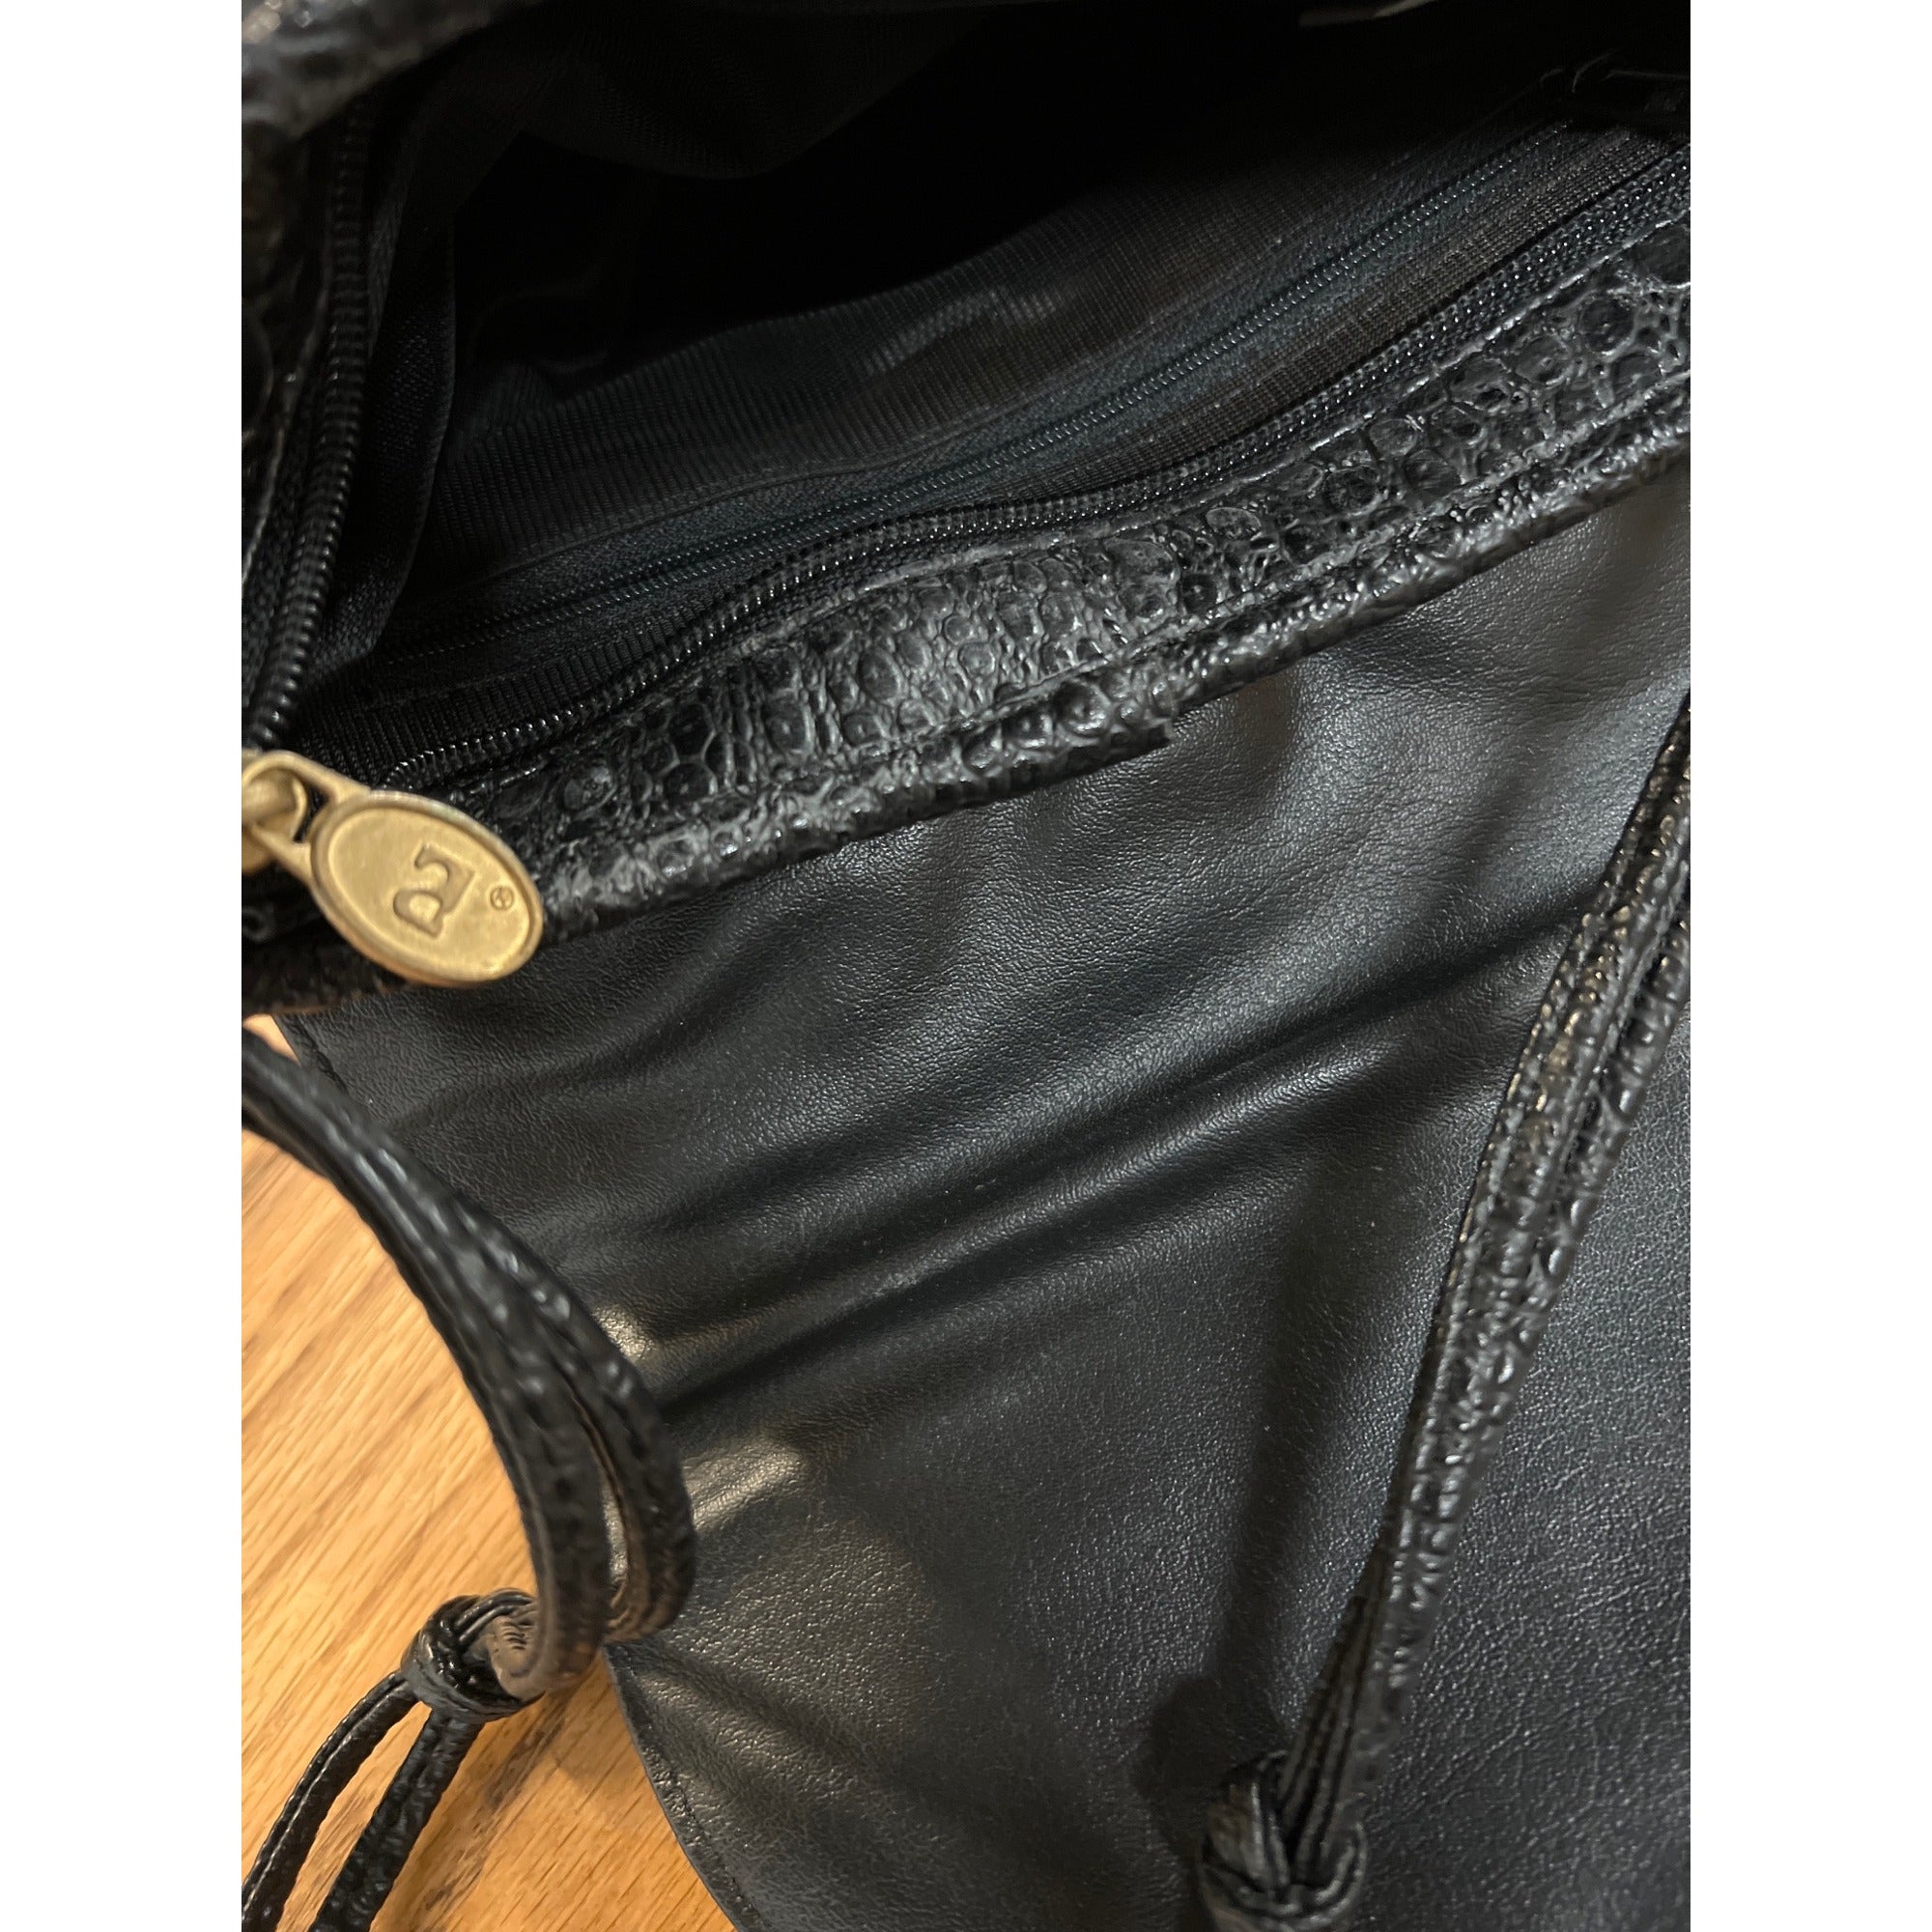 NAS Vintage Handbag Metallic Silver Gold Black Crossbody Bag Iconic 80s Style